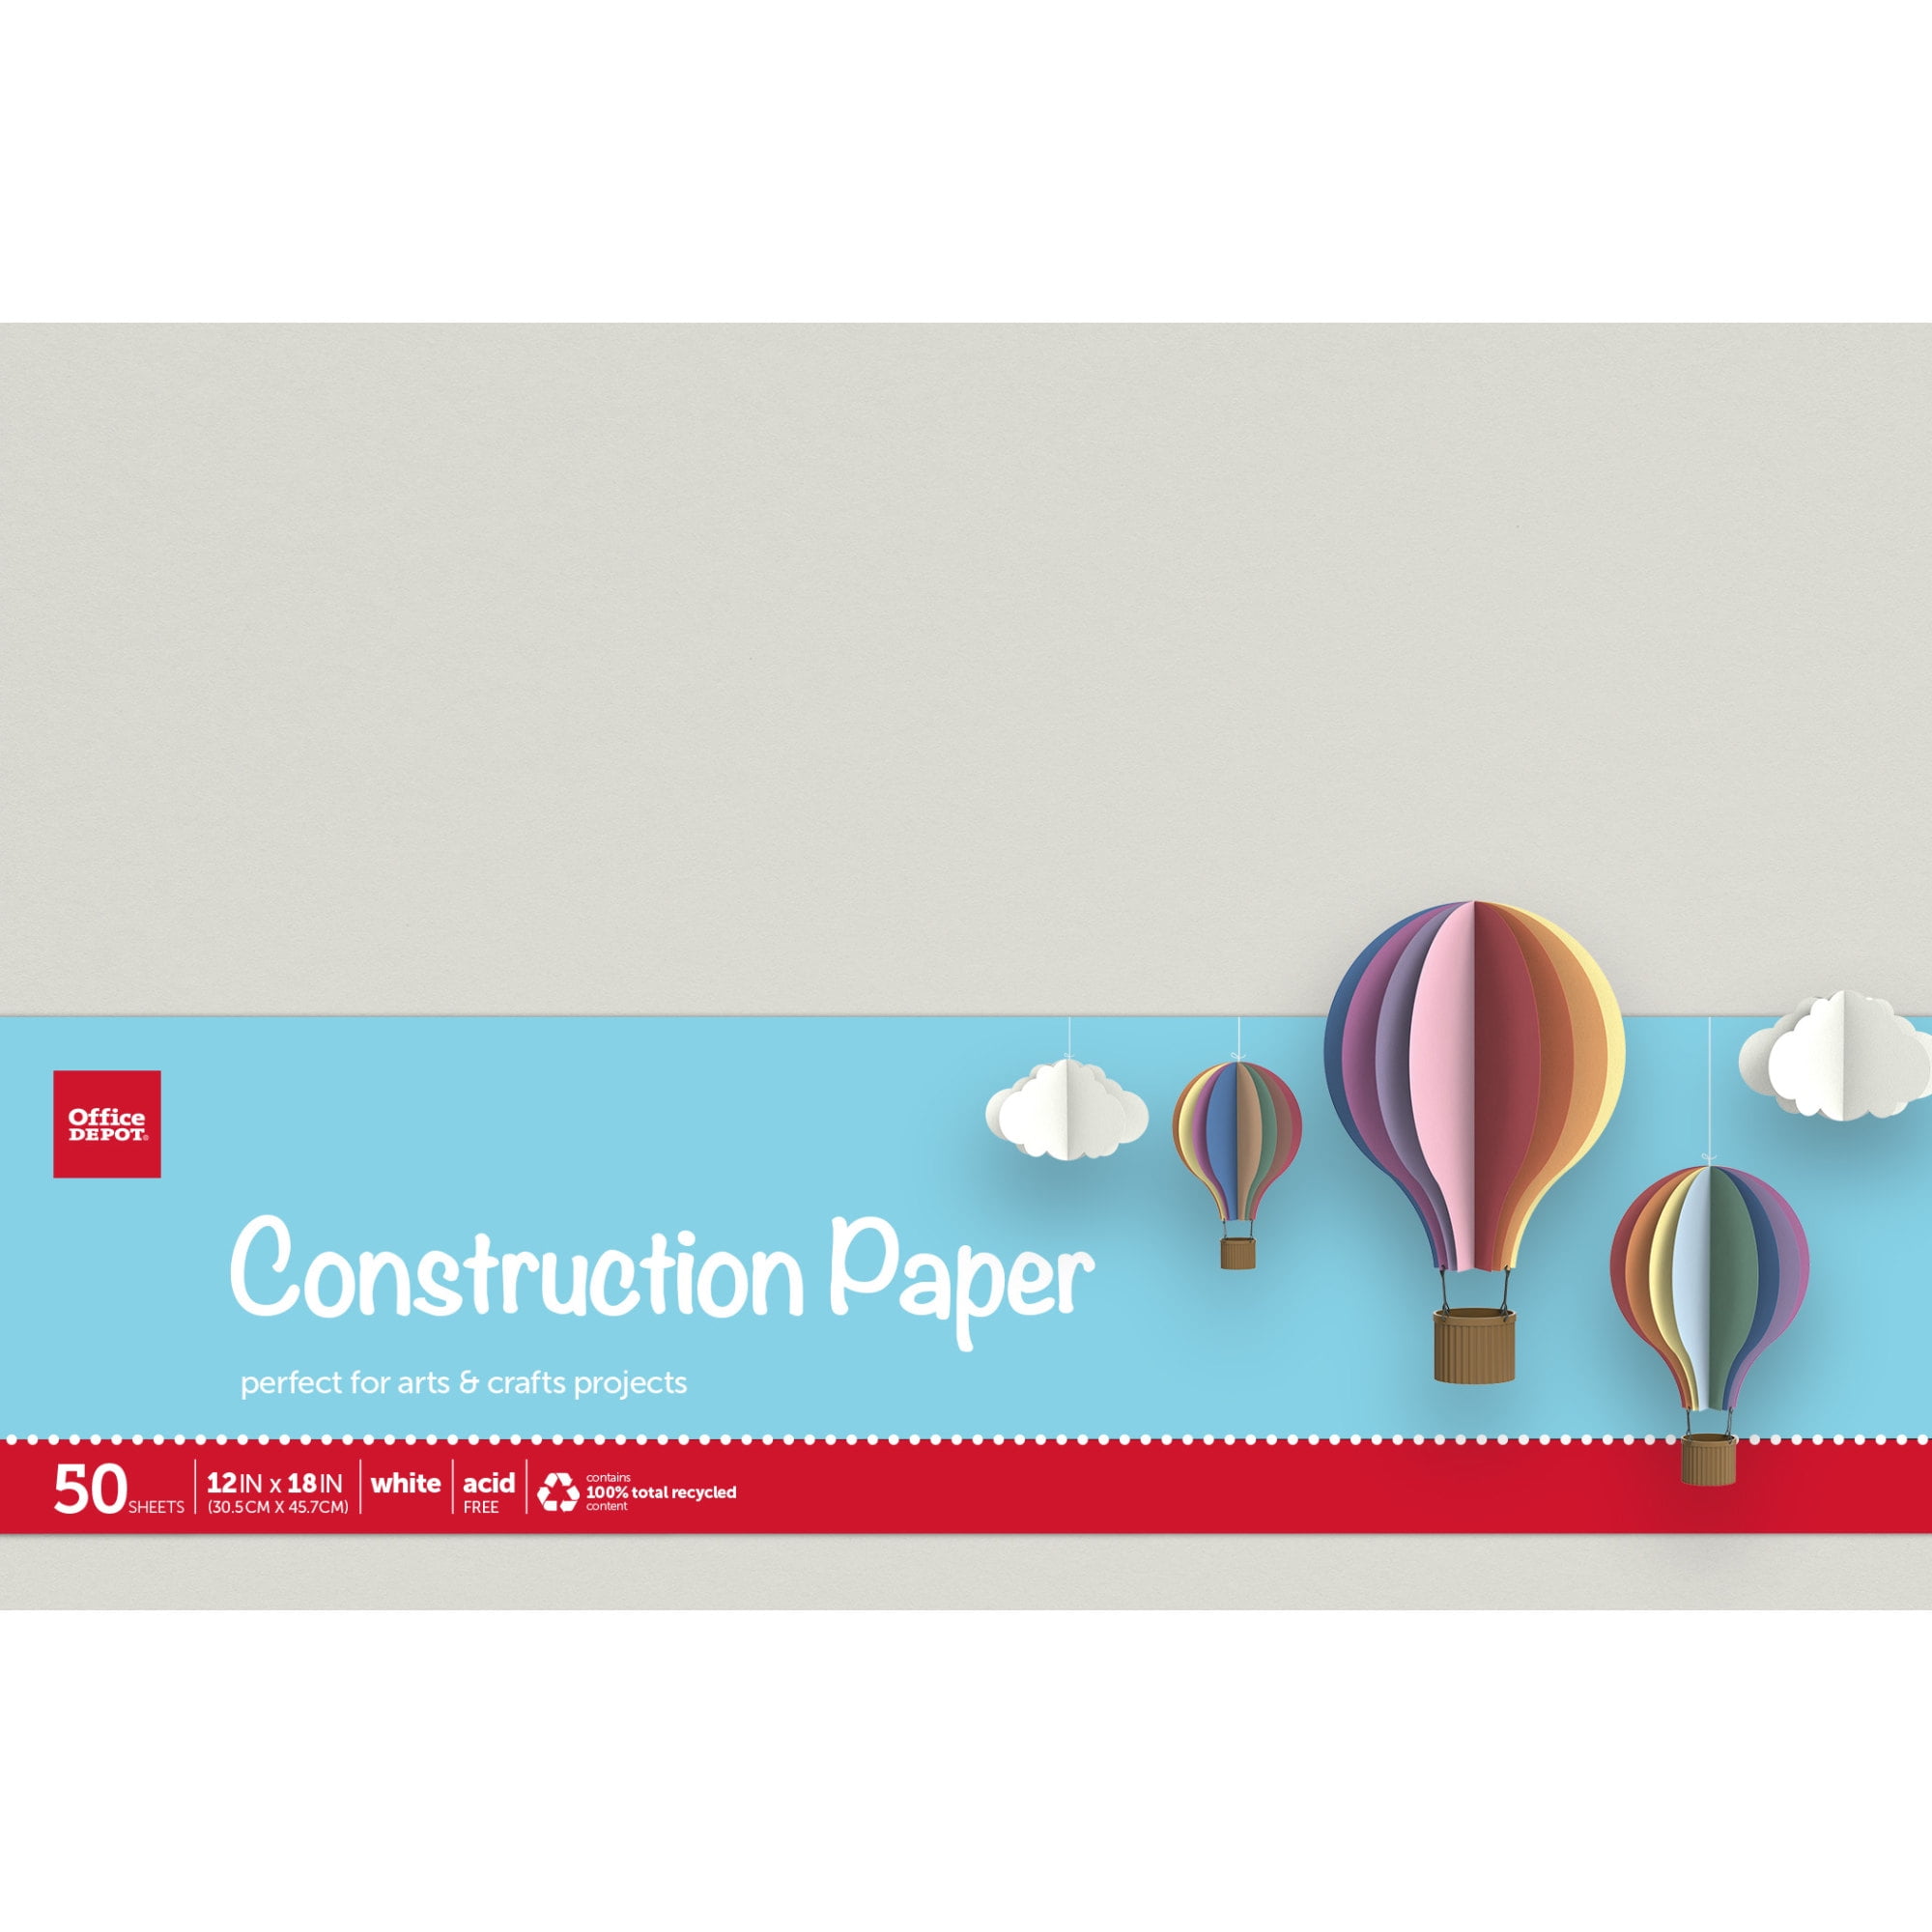 SunWorks Construction Paper 12 x 18 Gray Pack Of 50 - Office Depot